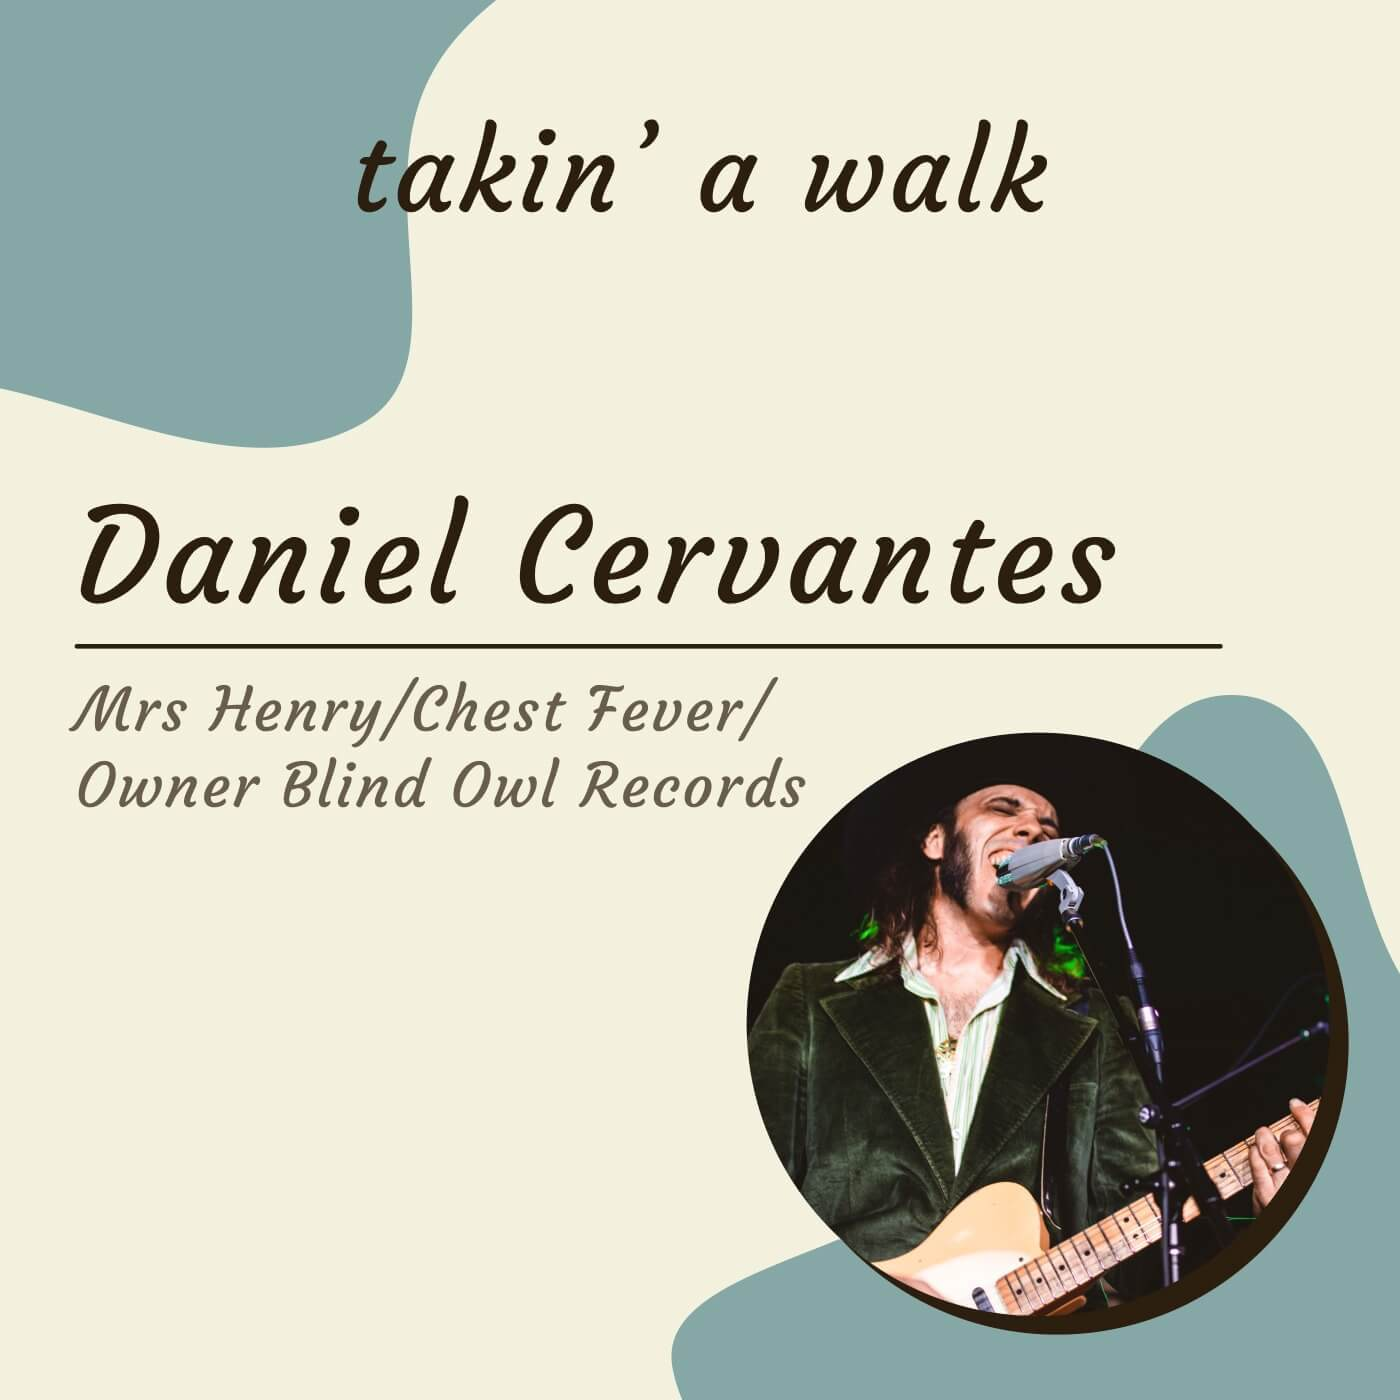 Daniel Cervantes Mrs Henry / Chest Fever / Dude Cervantes / Owner: Blind Owl Records